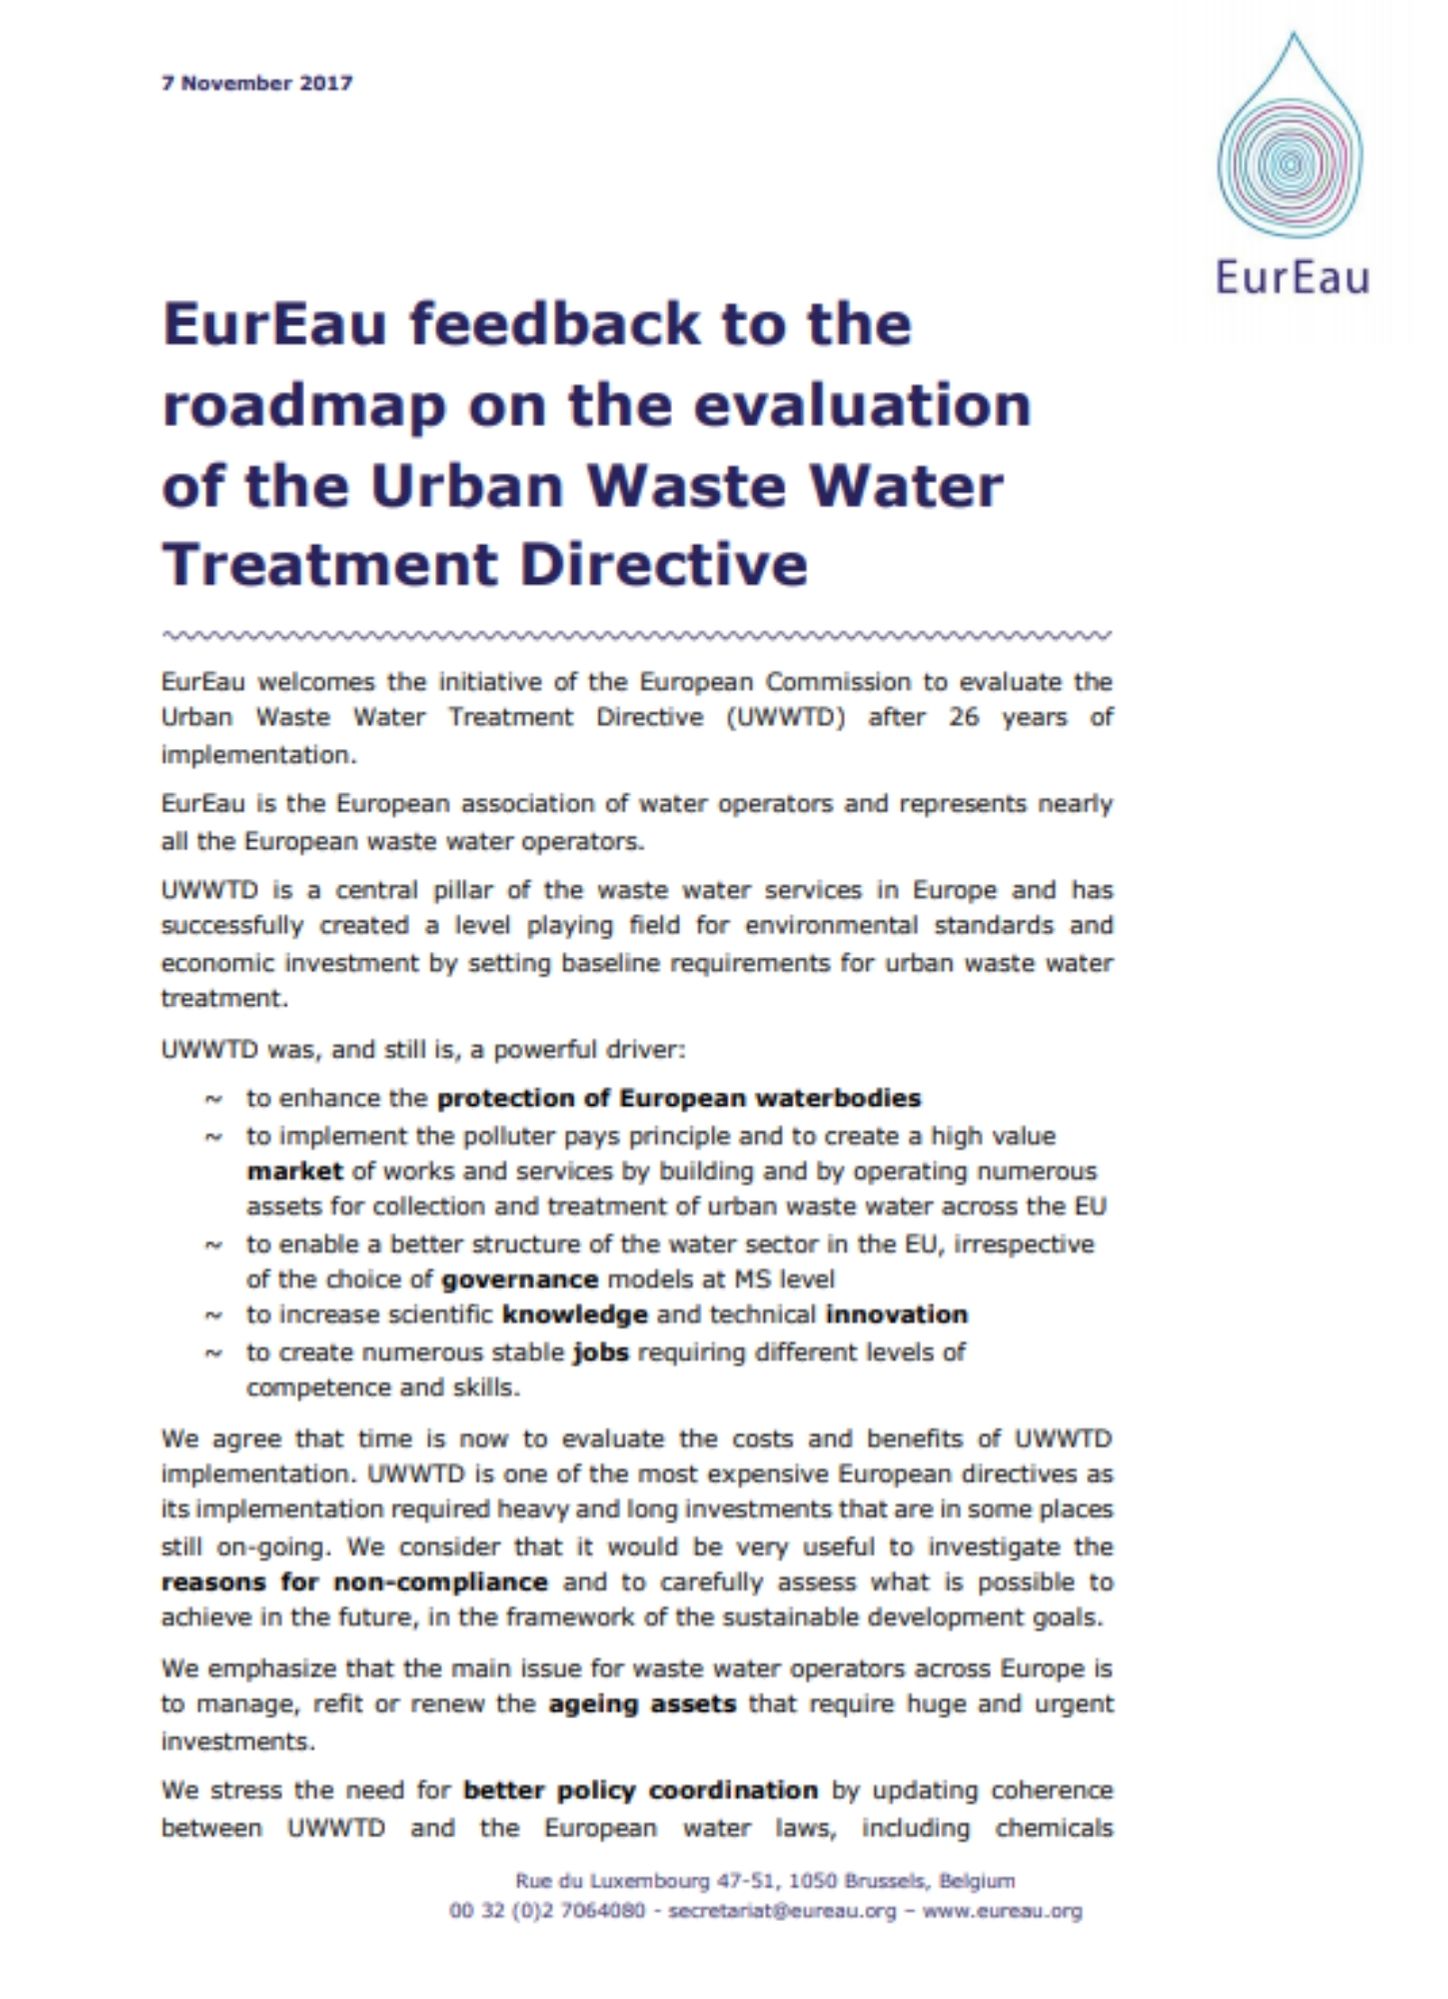 EurEau feedback on the evaluation of the UWWTD